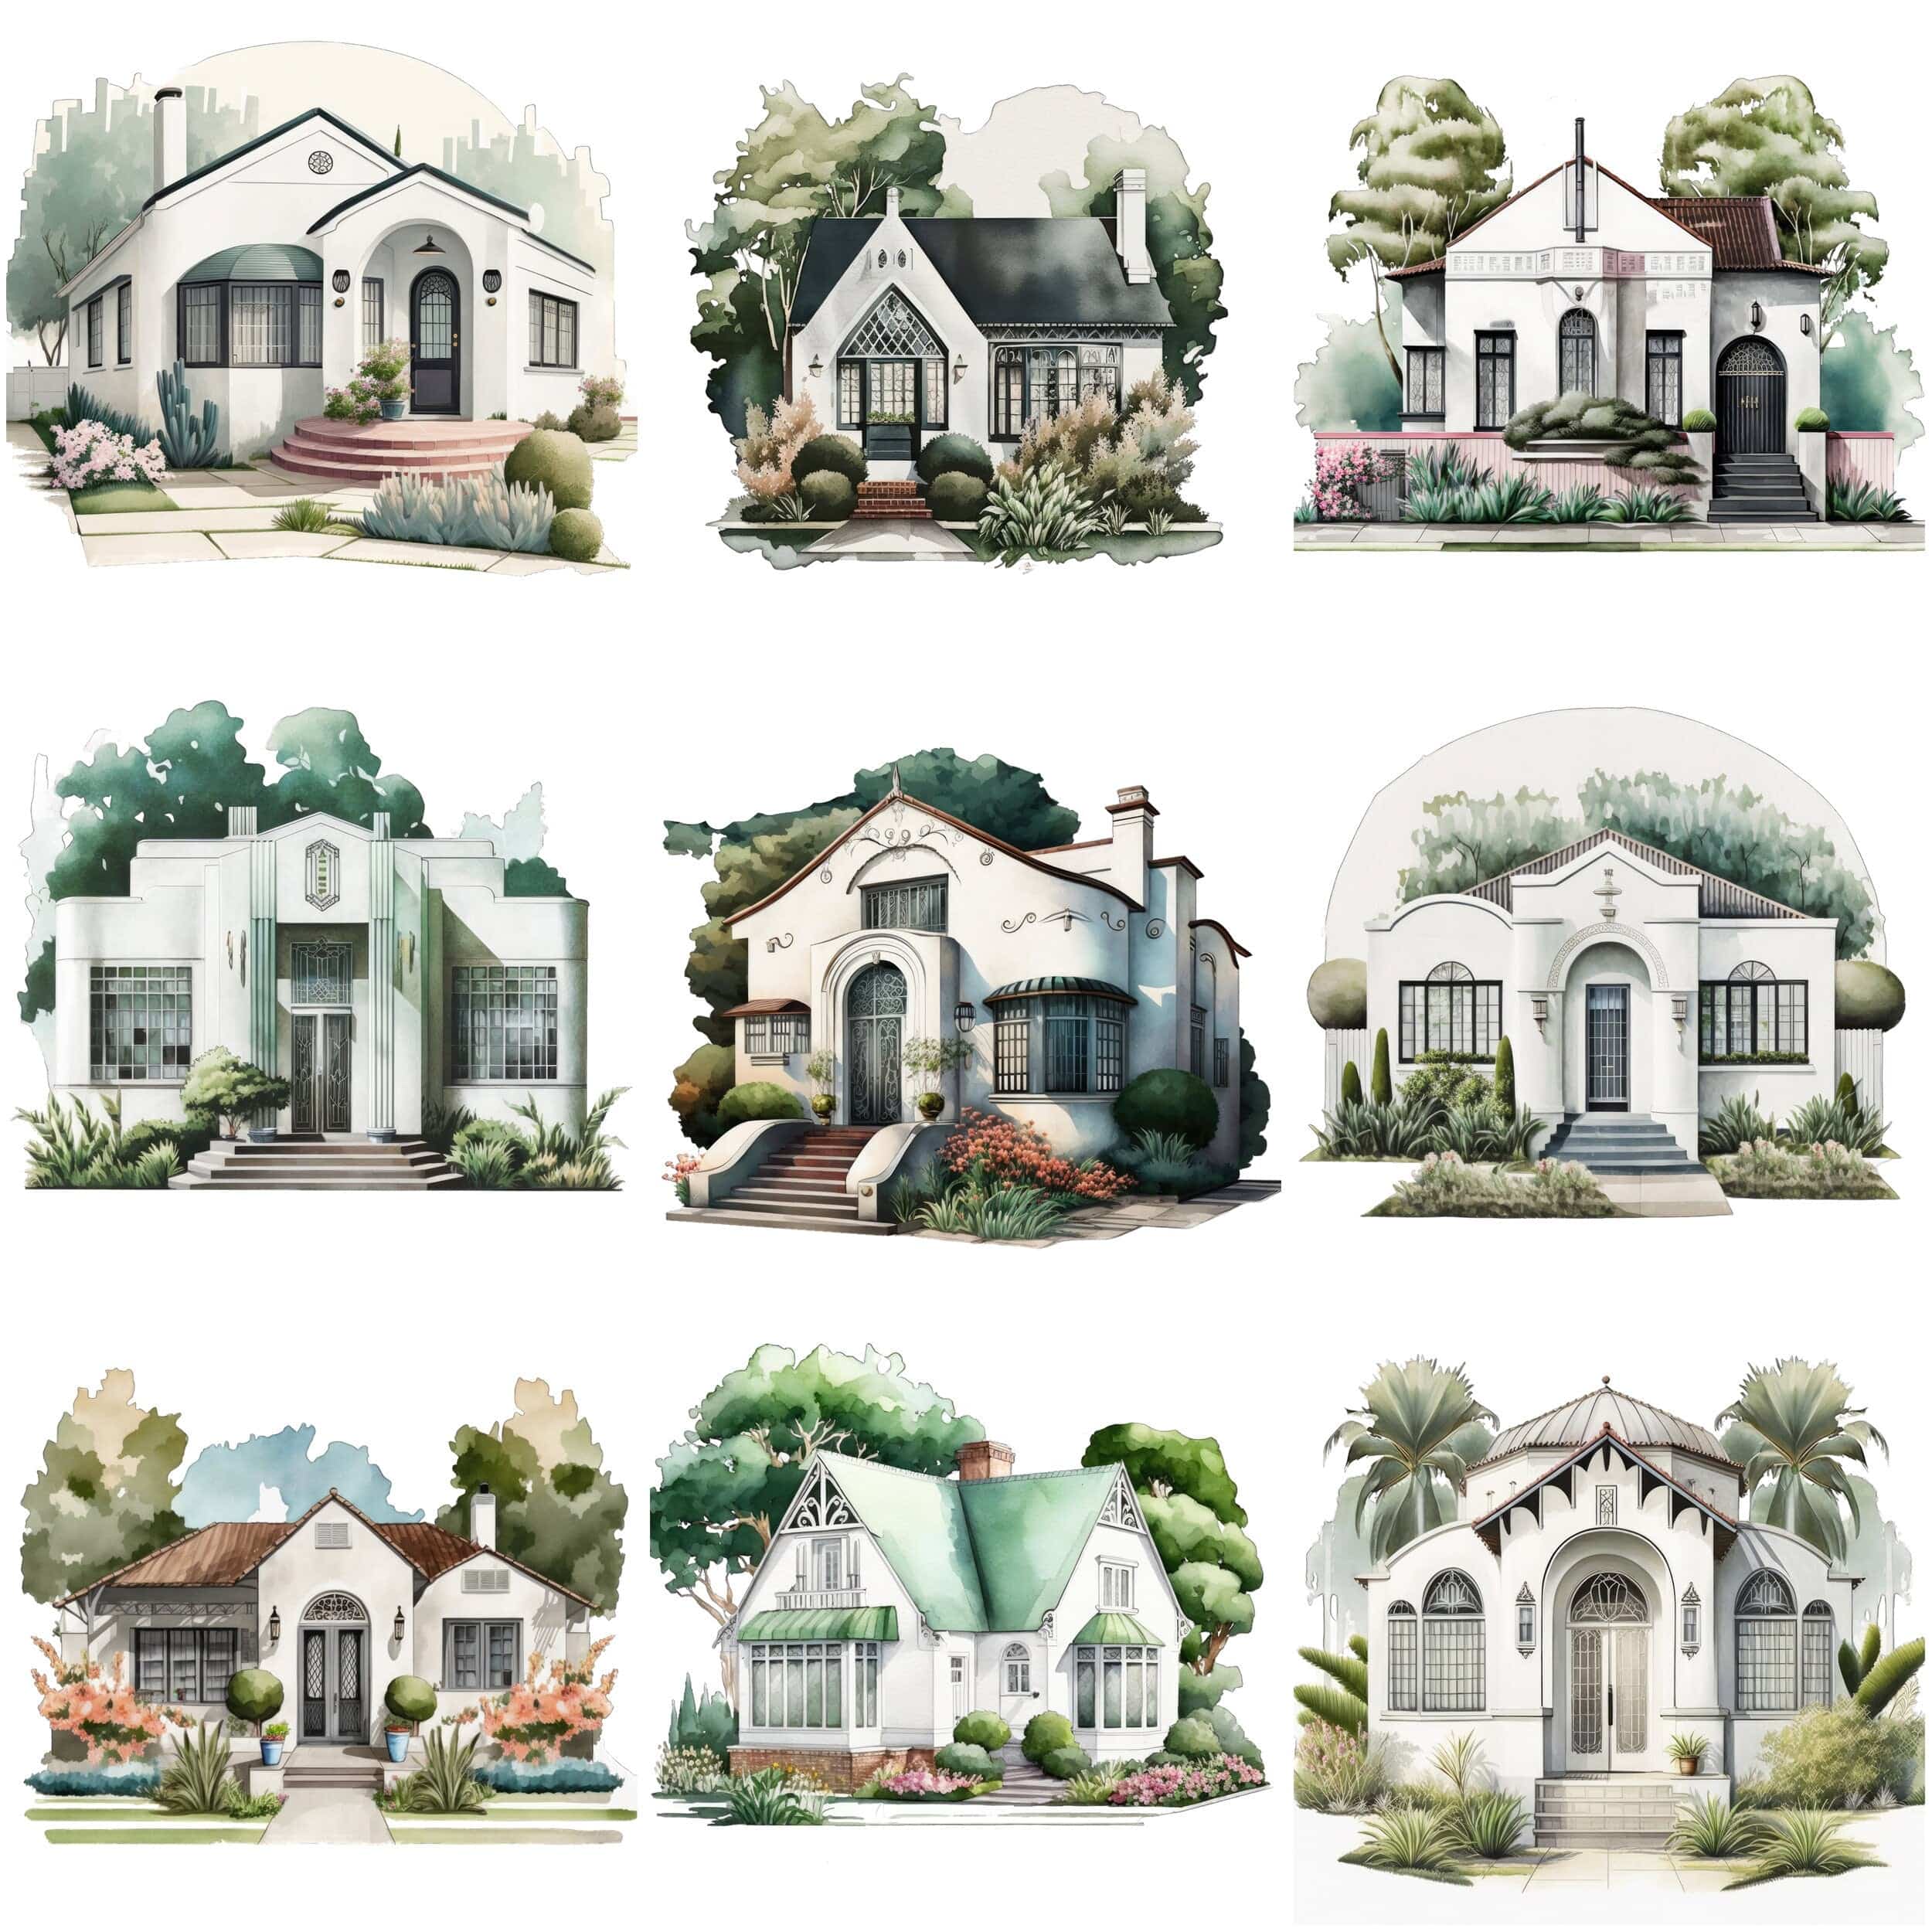 Art Deco House Bundle - 65 Vintage Home & Cottage Illustrations, Instant Download, Digital Prints, Architecture Wall Art Collection Digital Download Sumobundle